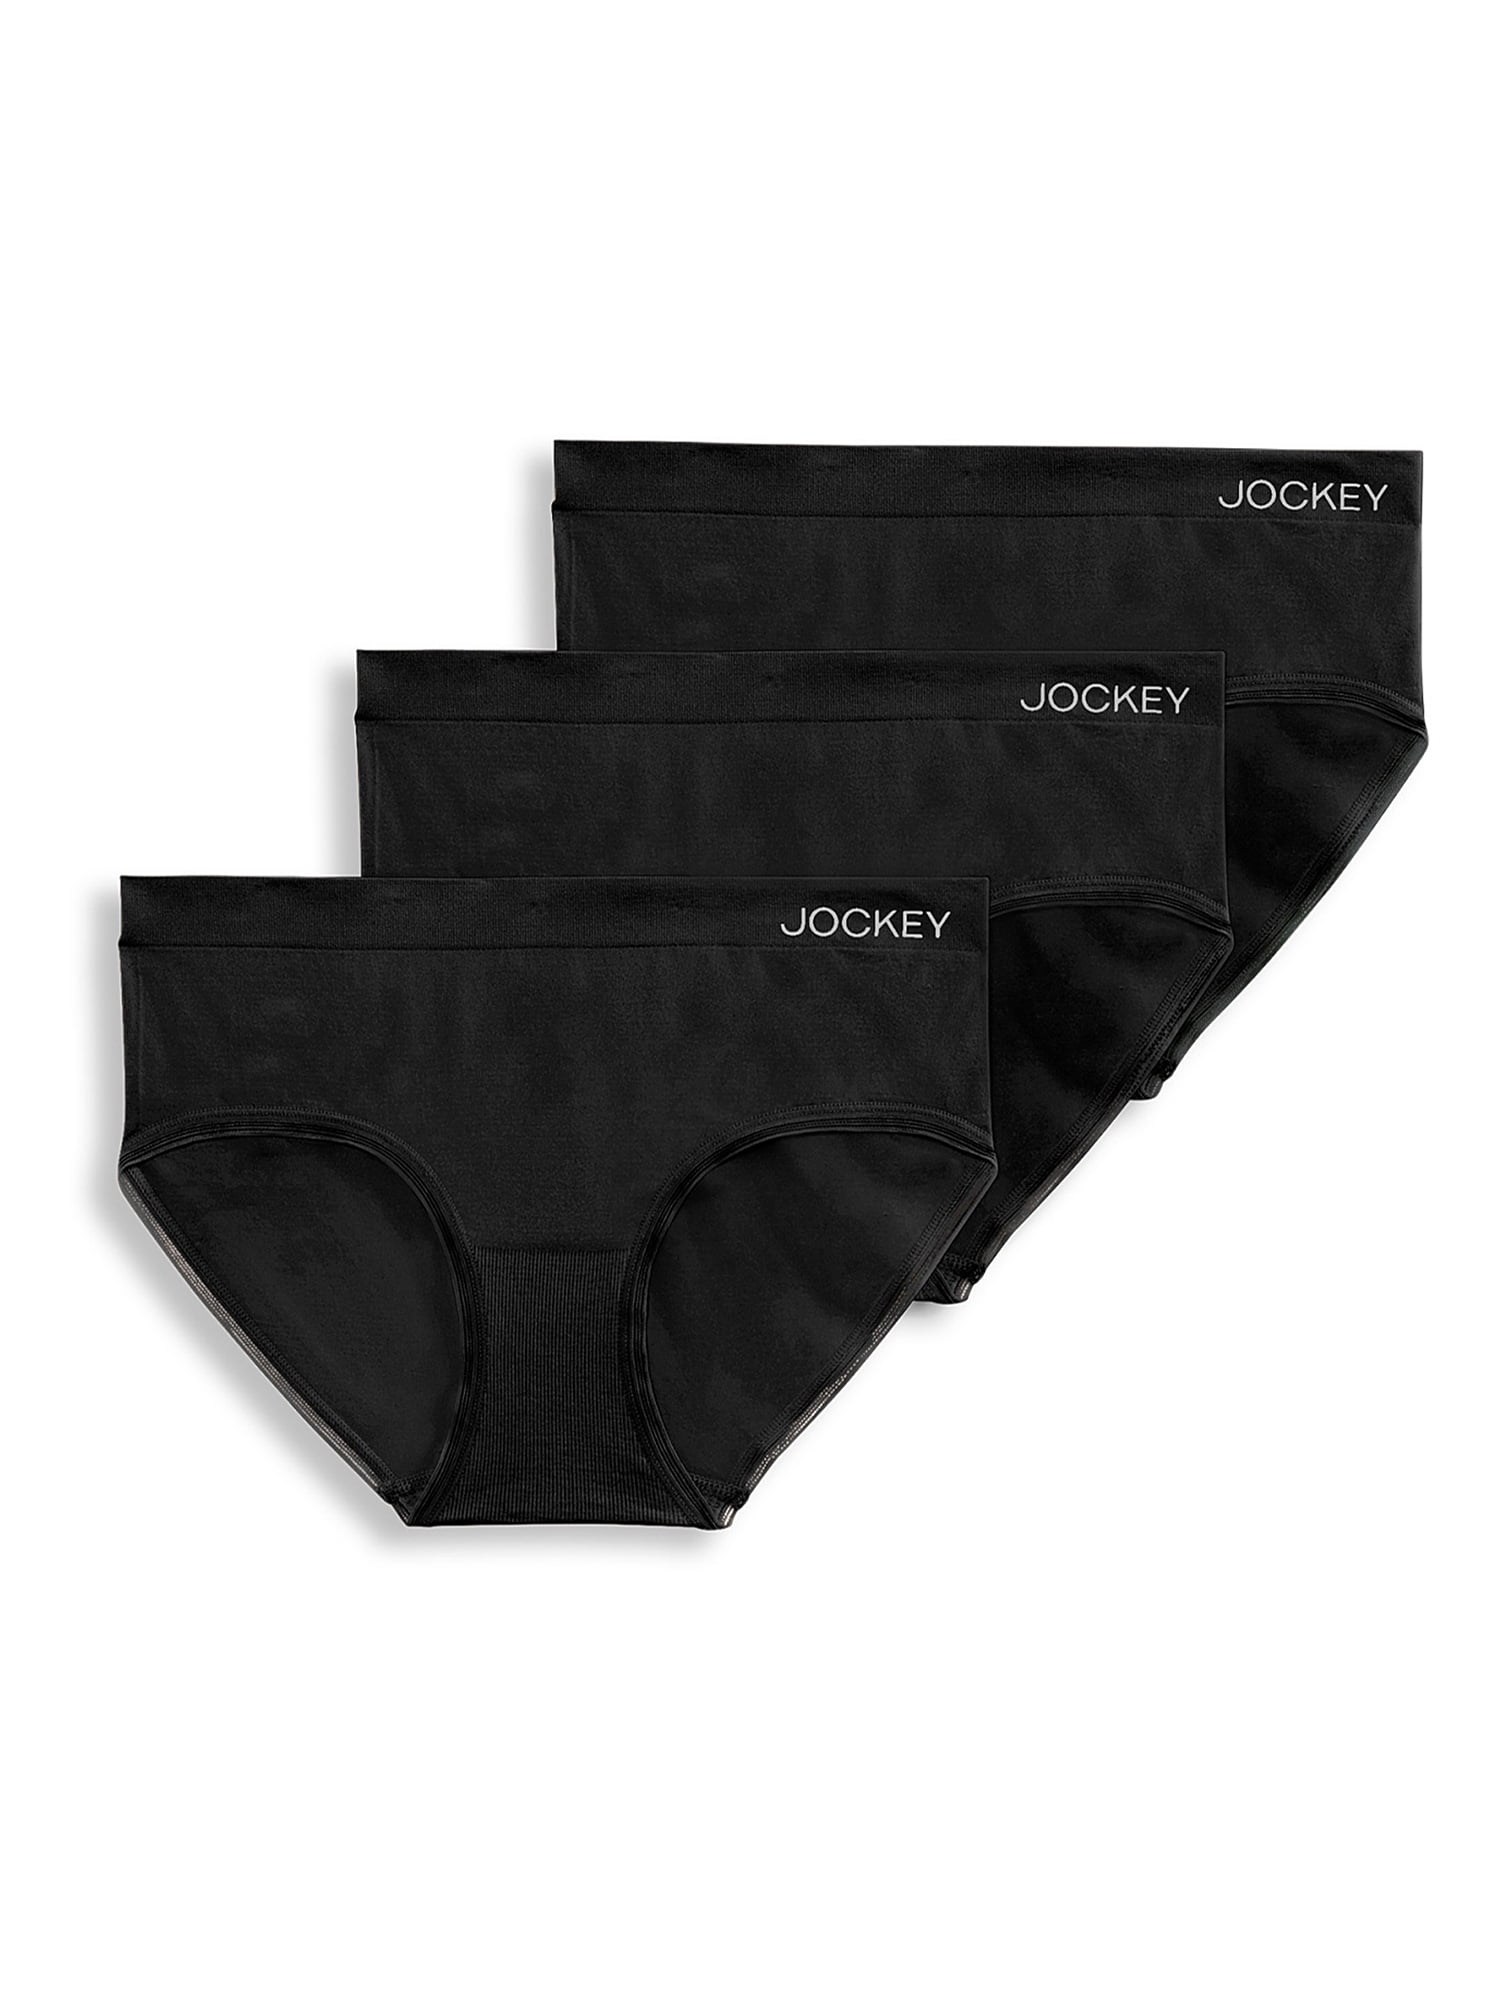 Jockey® Essentials Women's Seamfree® Eco Hipster Underwear, 3 Pack, Soft No  Line Panties, Comfort Panty, Sizes Small-3XL, 5331 